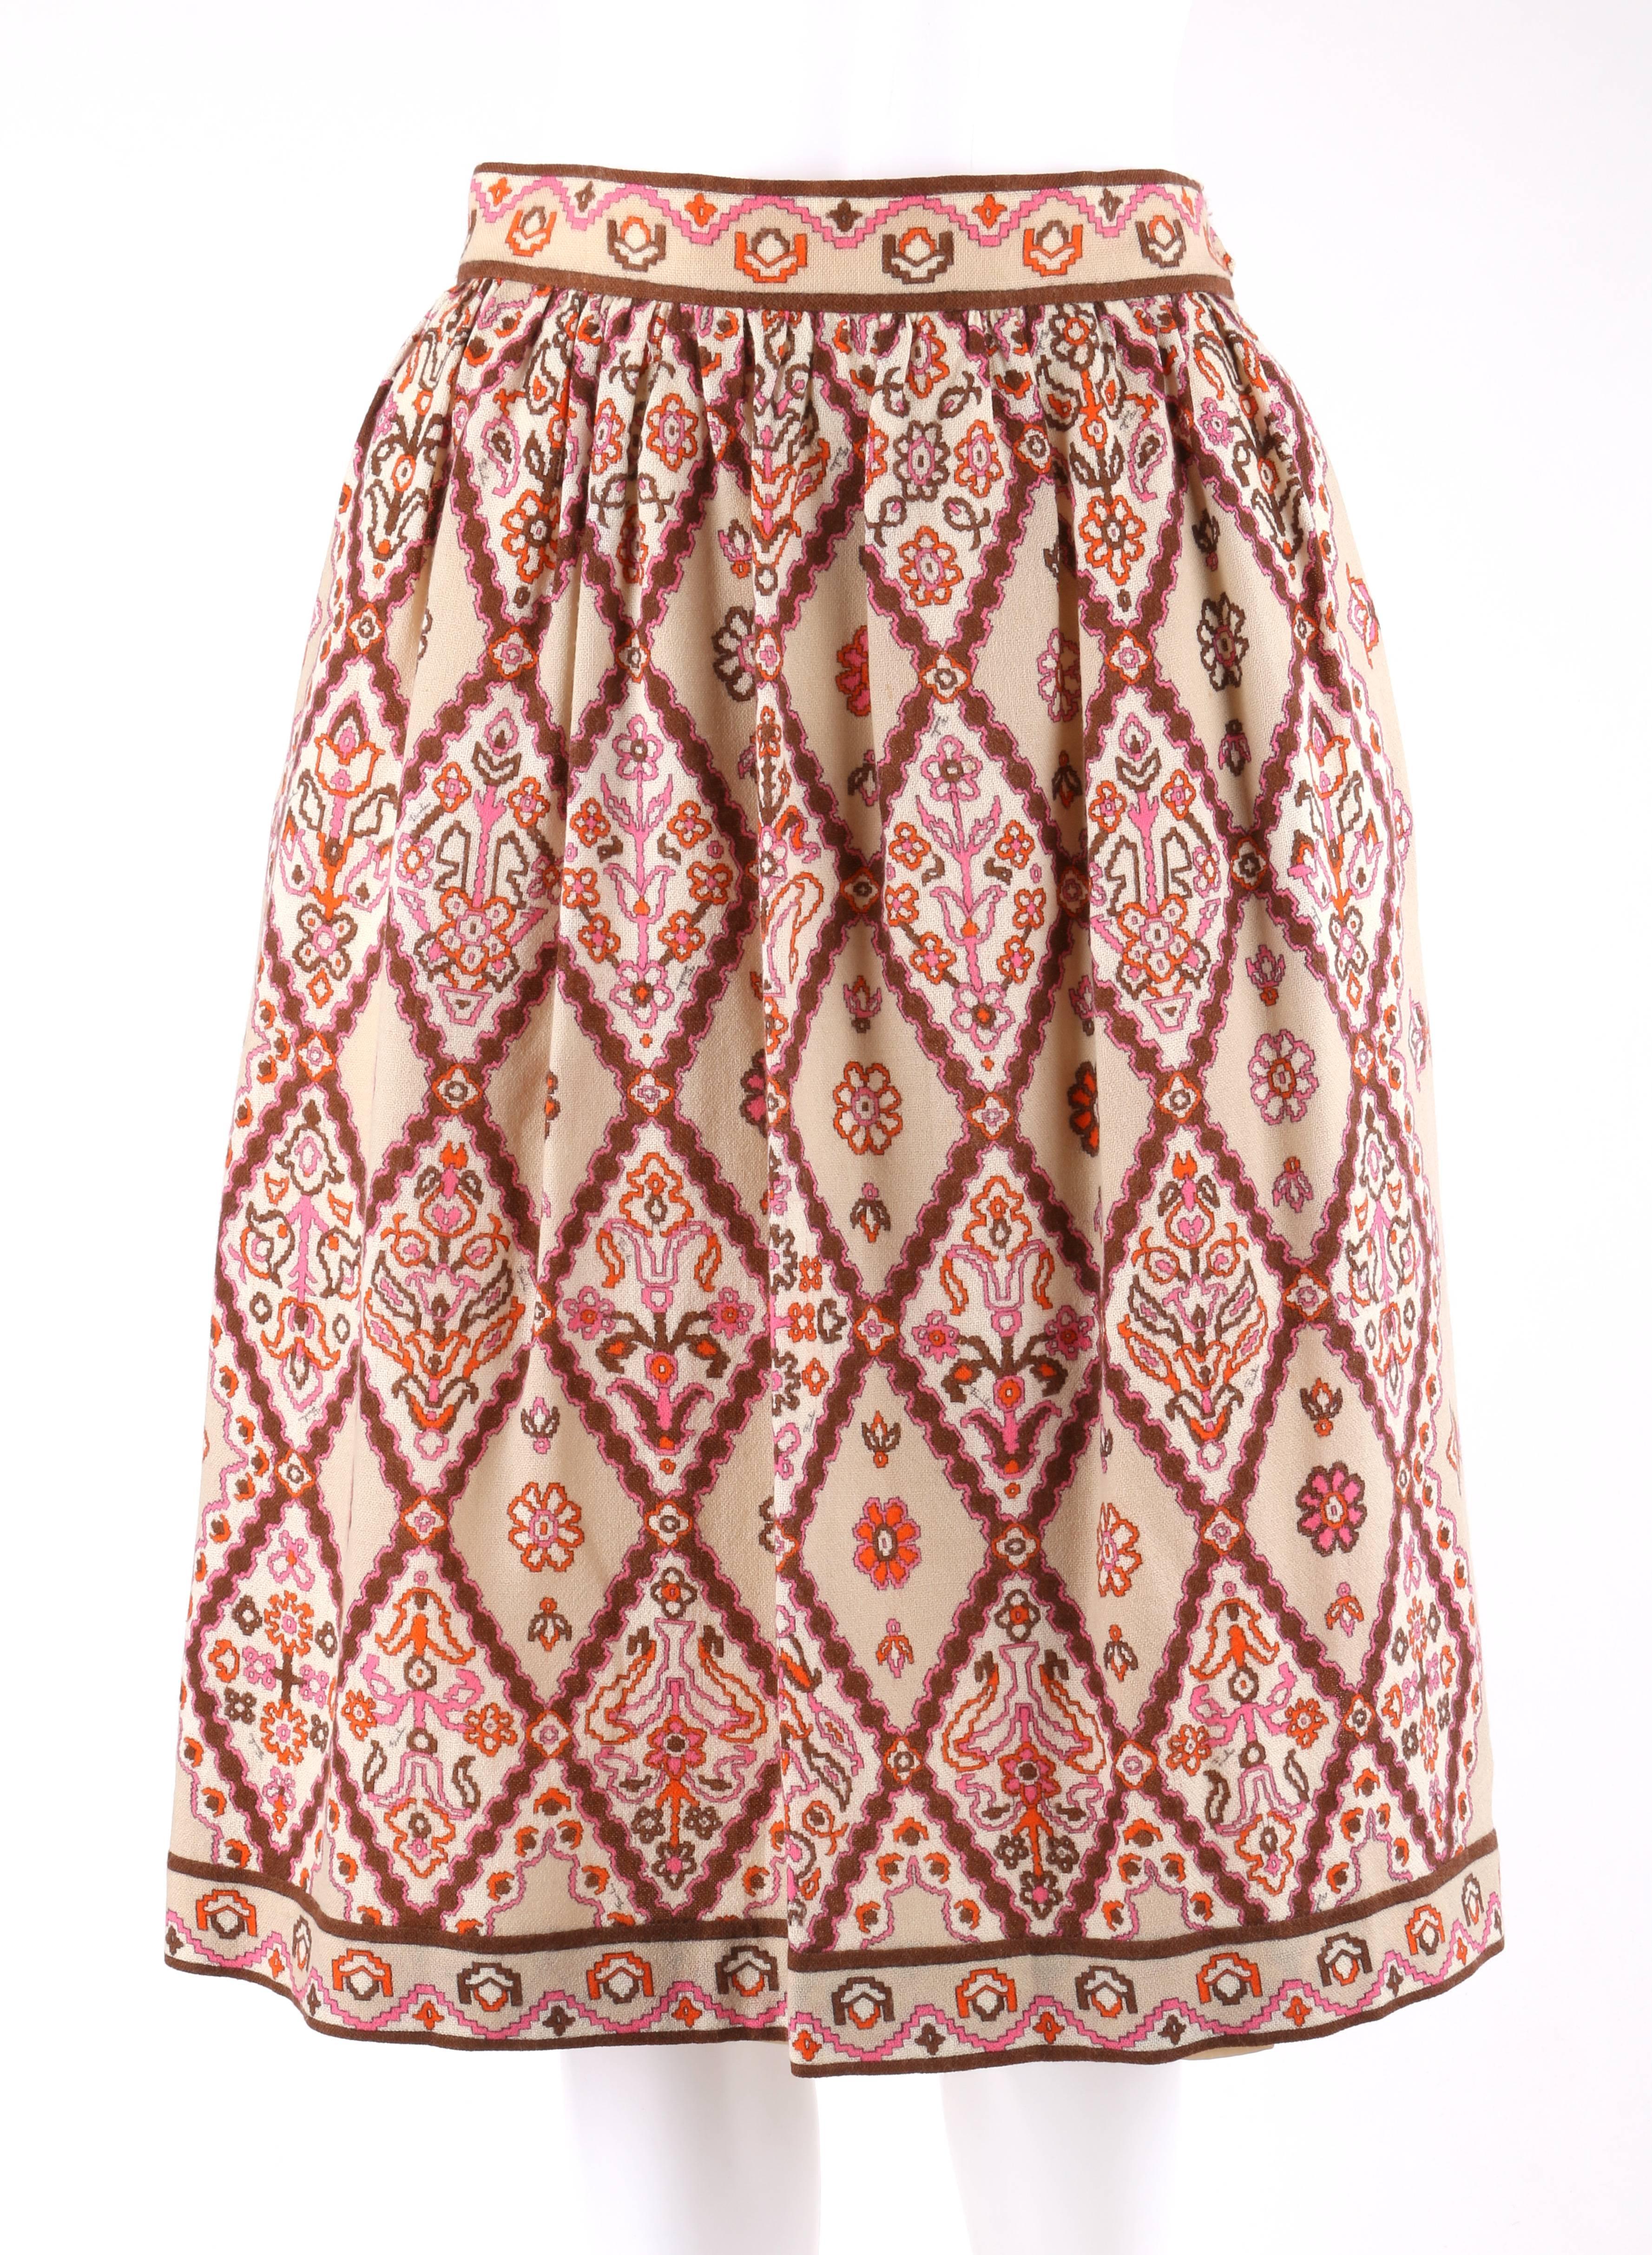 Emilio Pucci Signature Print Shirt Blouse Gathered Skirt Dress Set, circa 1950s For Sale 3